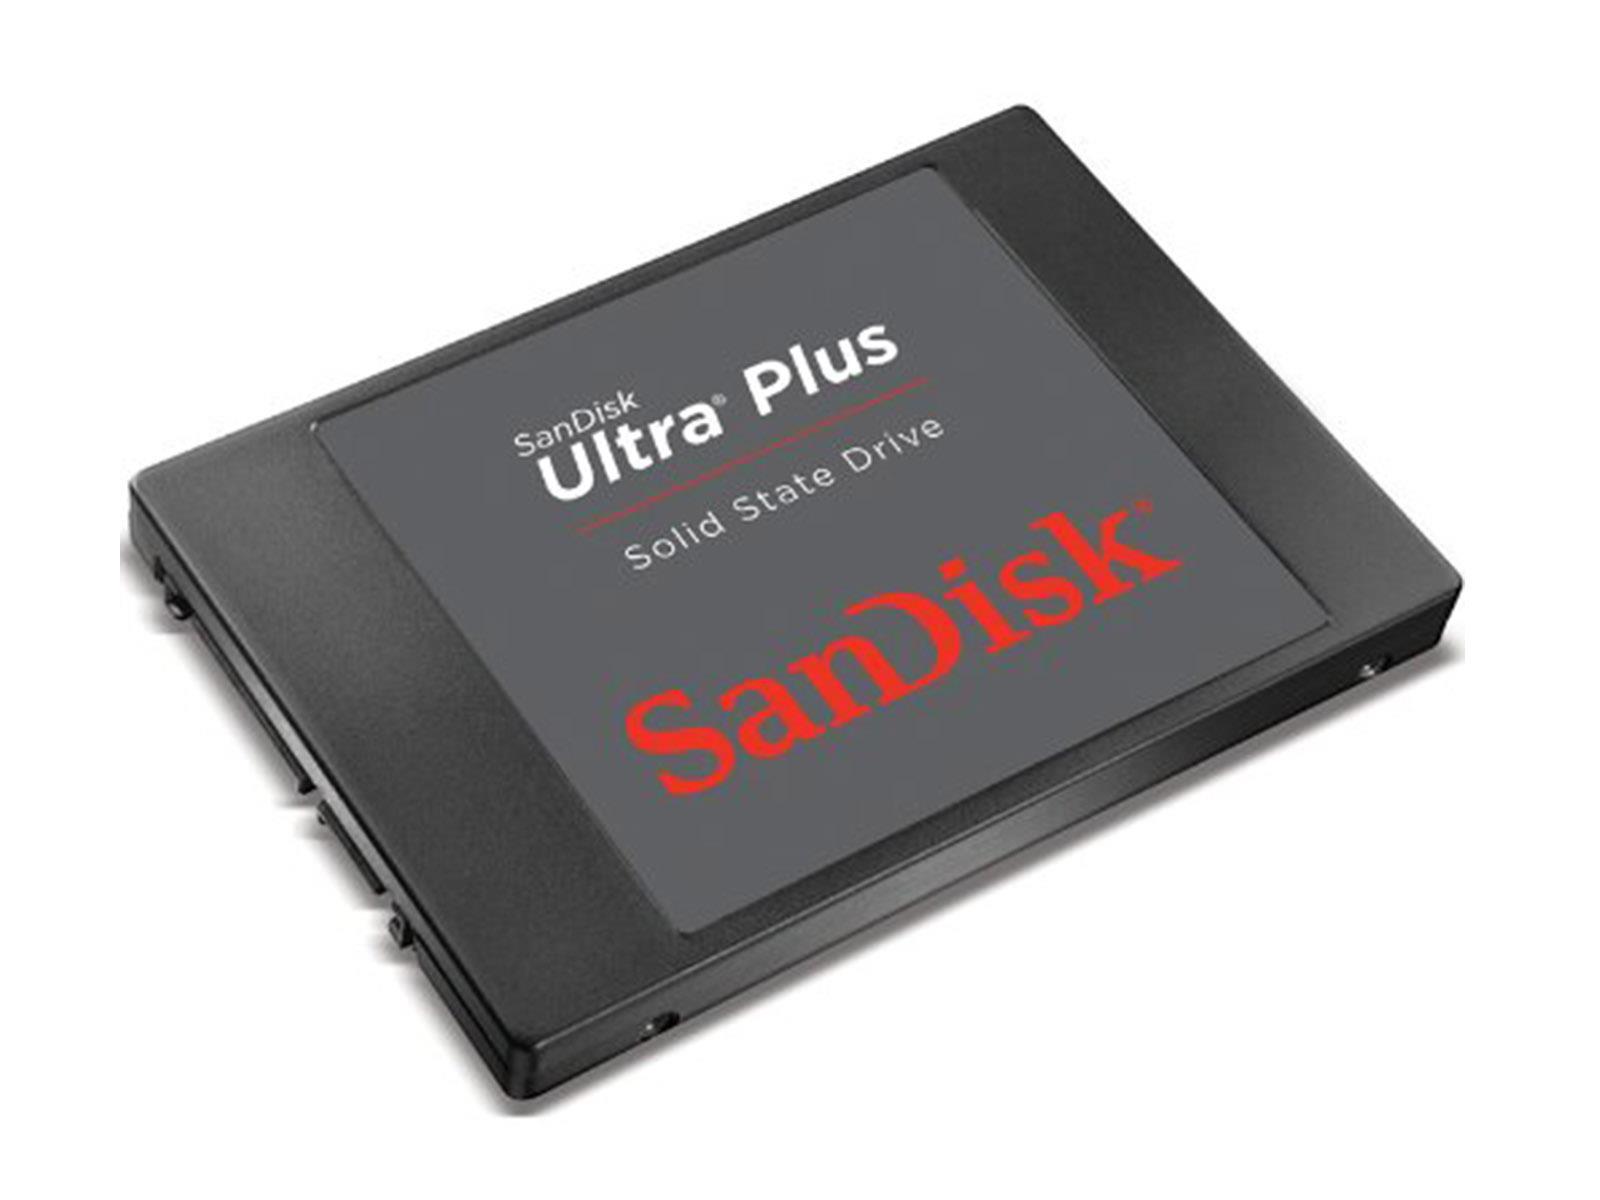 Sandisk Ultra Plus 64GB SSD